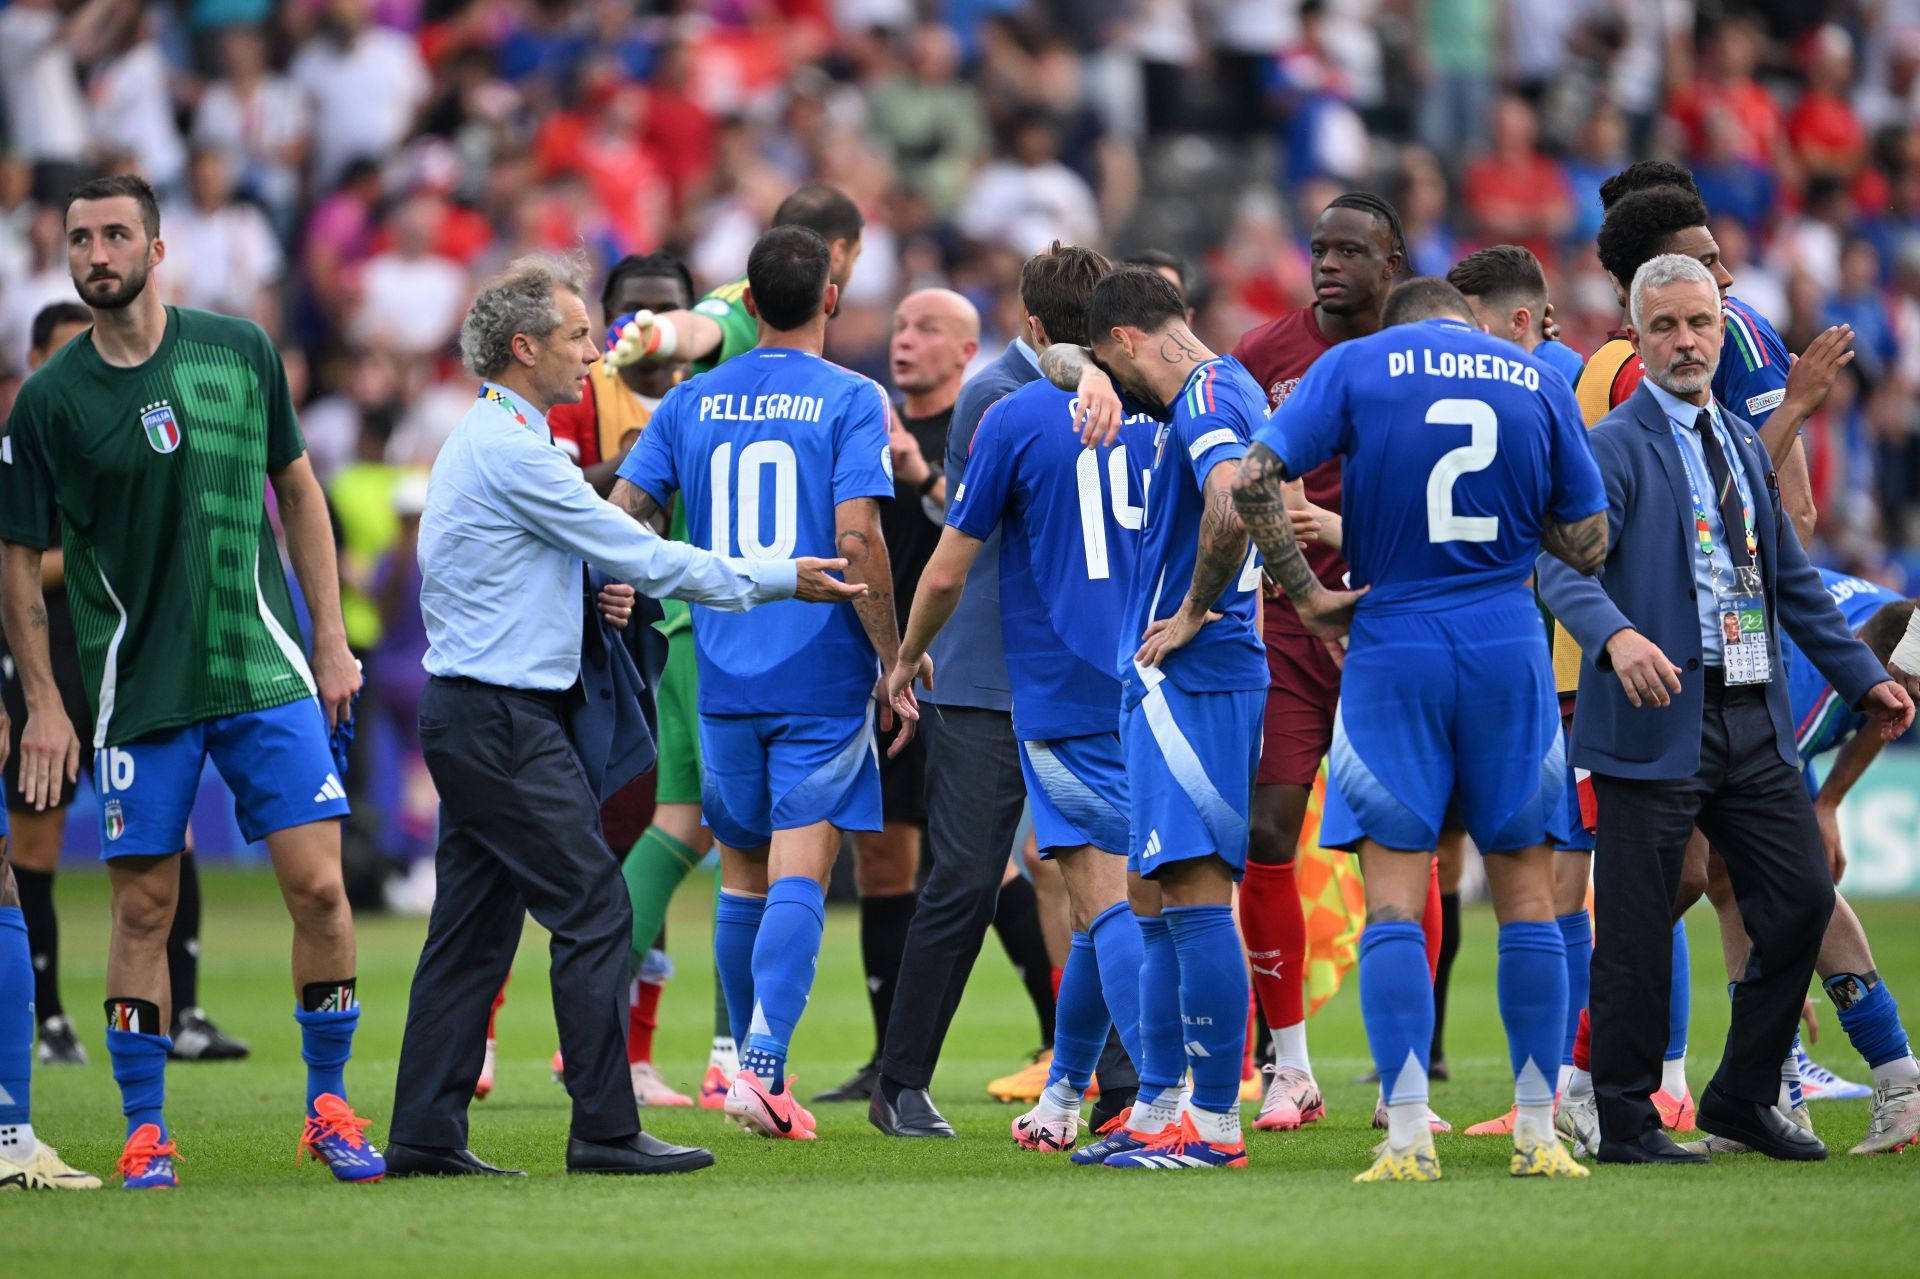 The Azzurri suffered a 2-0 defeat.